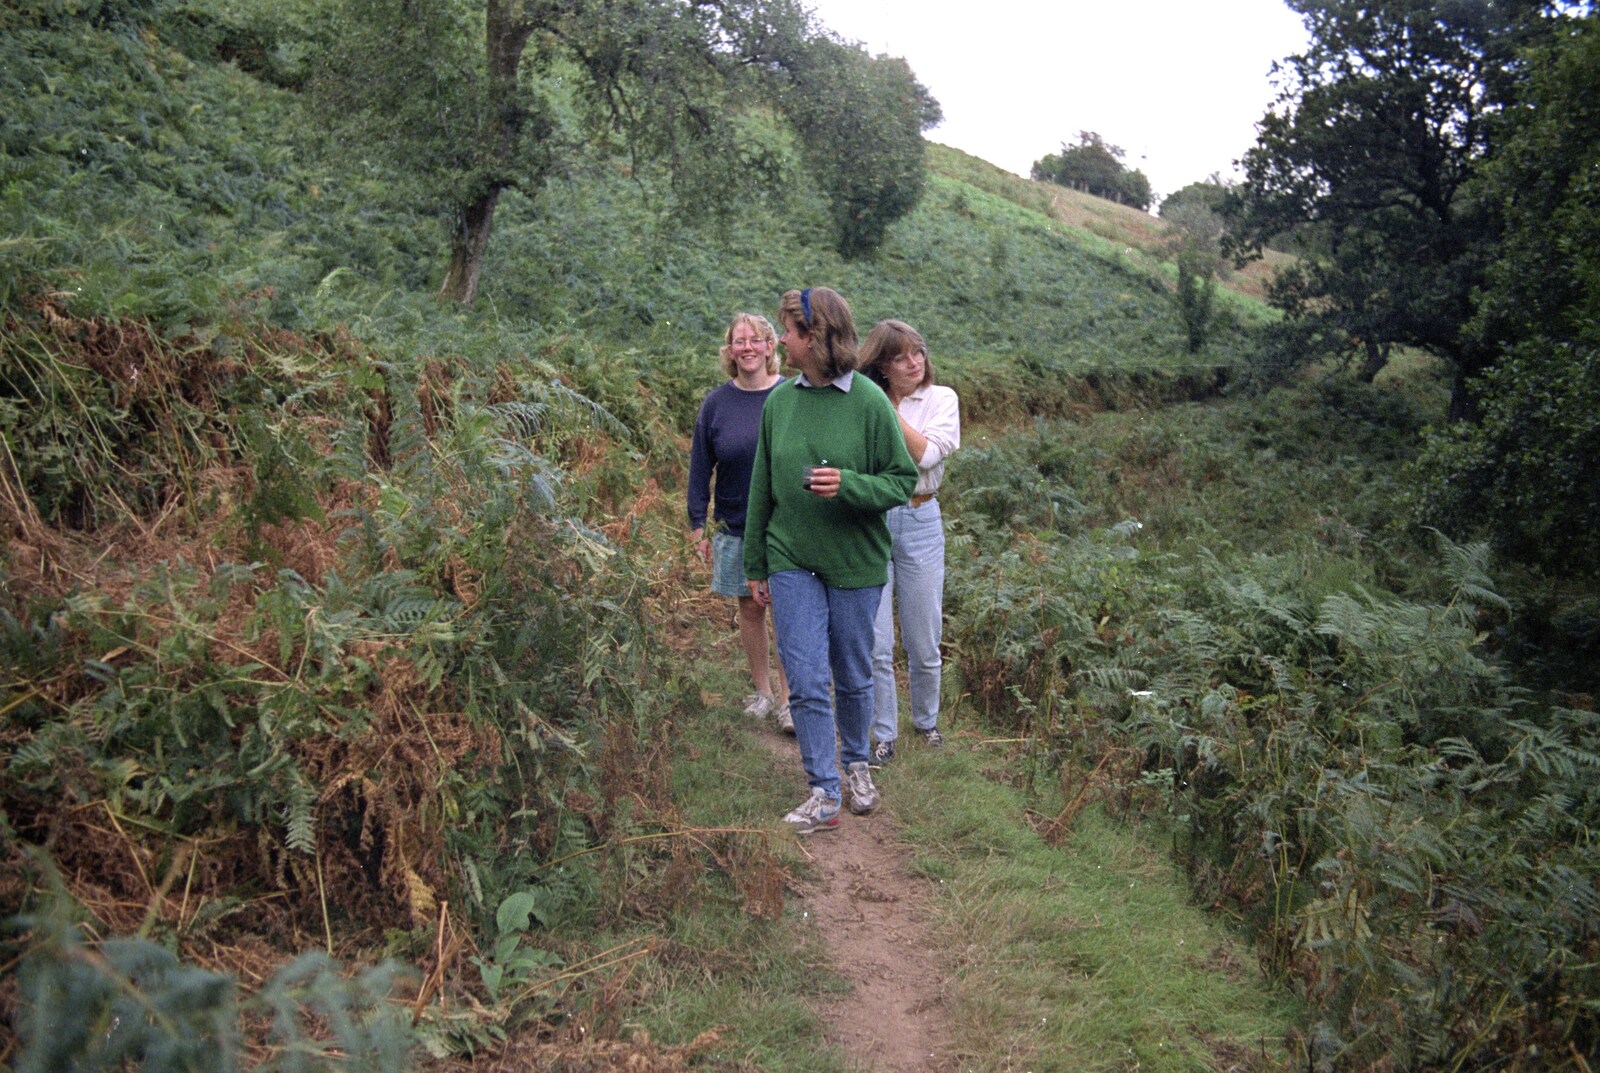 Liz's Party, Abergavenny, Monmouthshire, Wales - 4th August 1990: Roaming around through the bracken